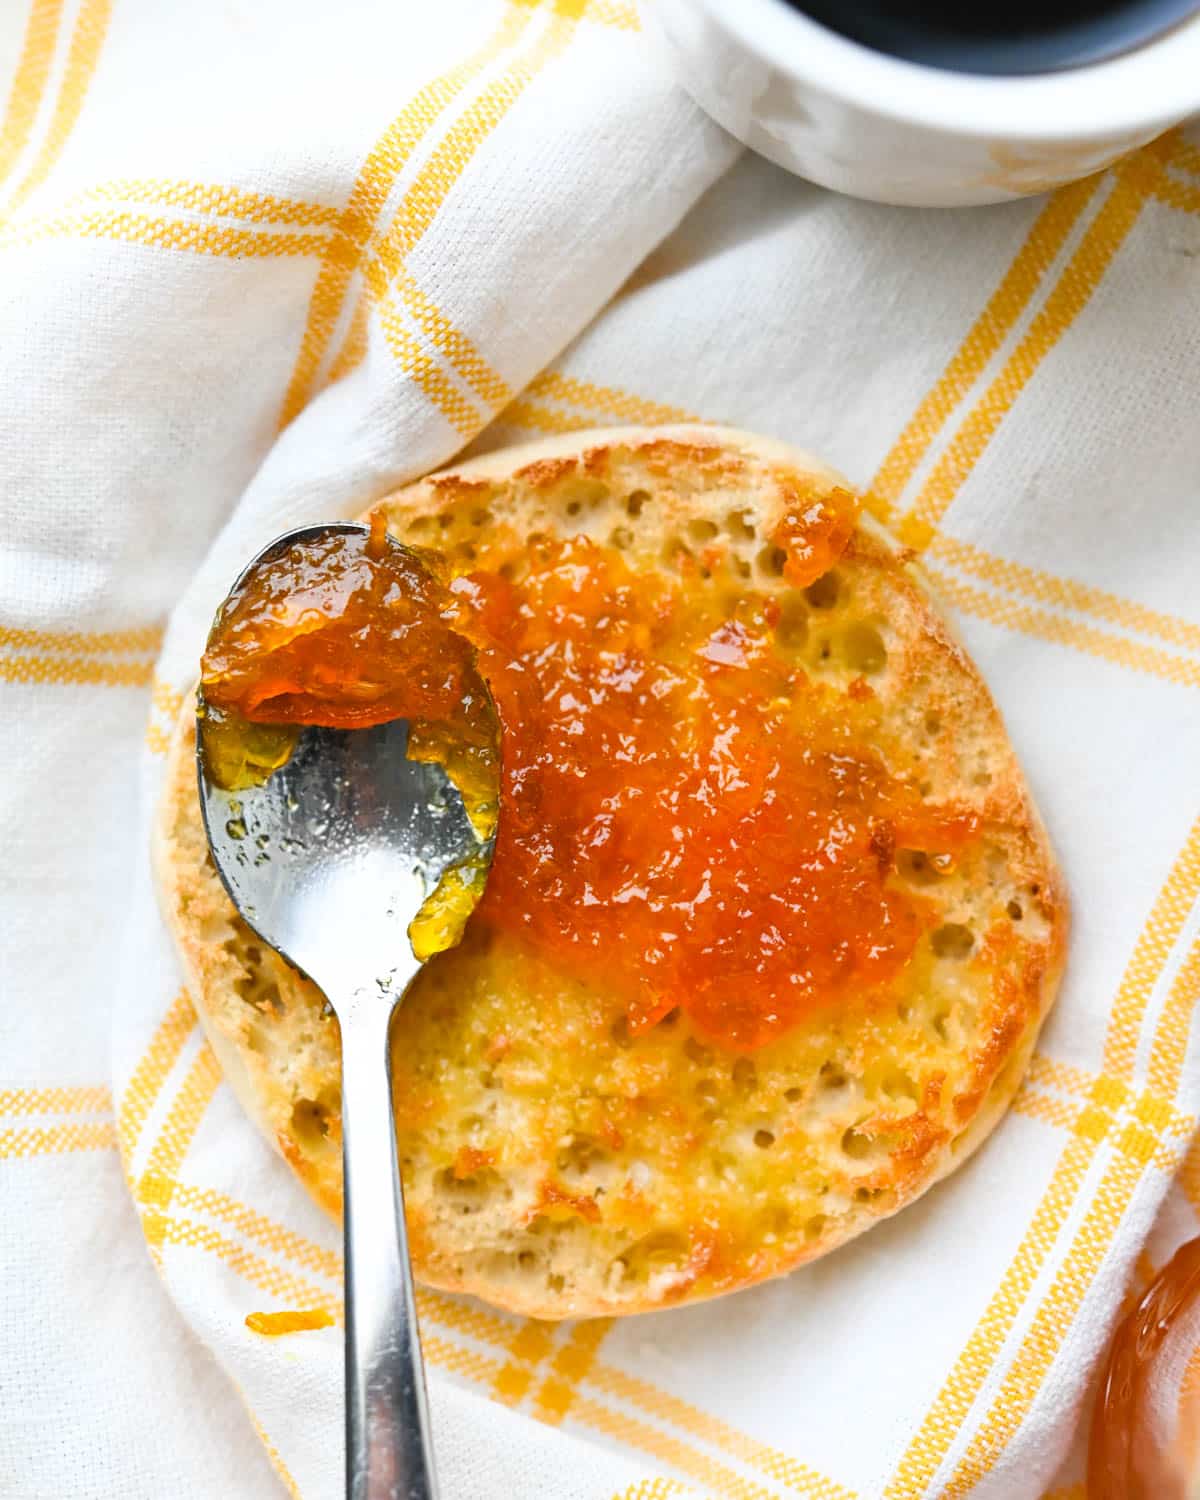 I am spreading calamansi lime marmalade on an English muffin.